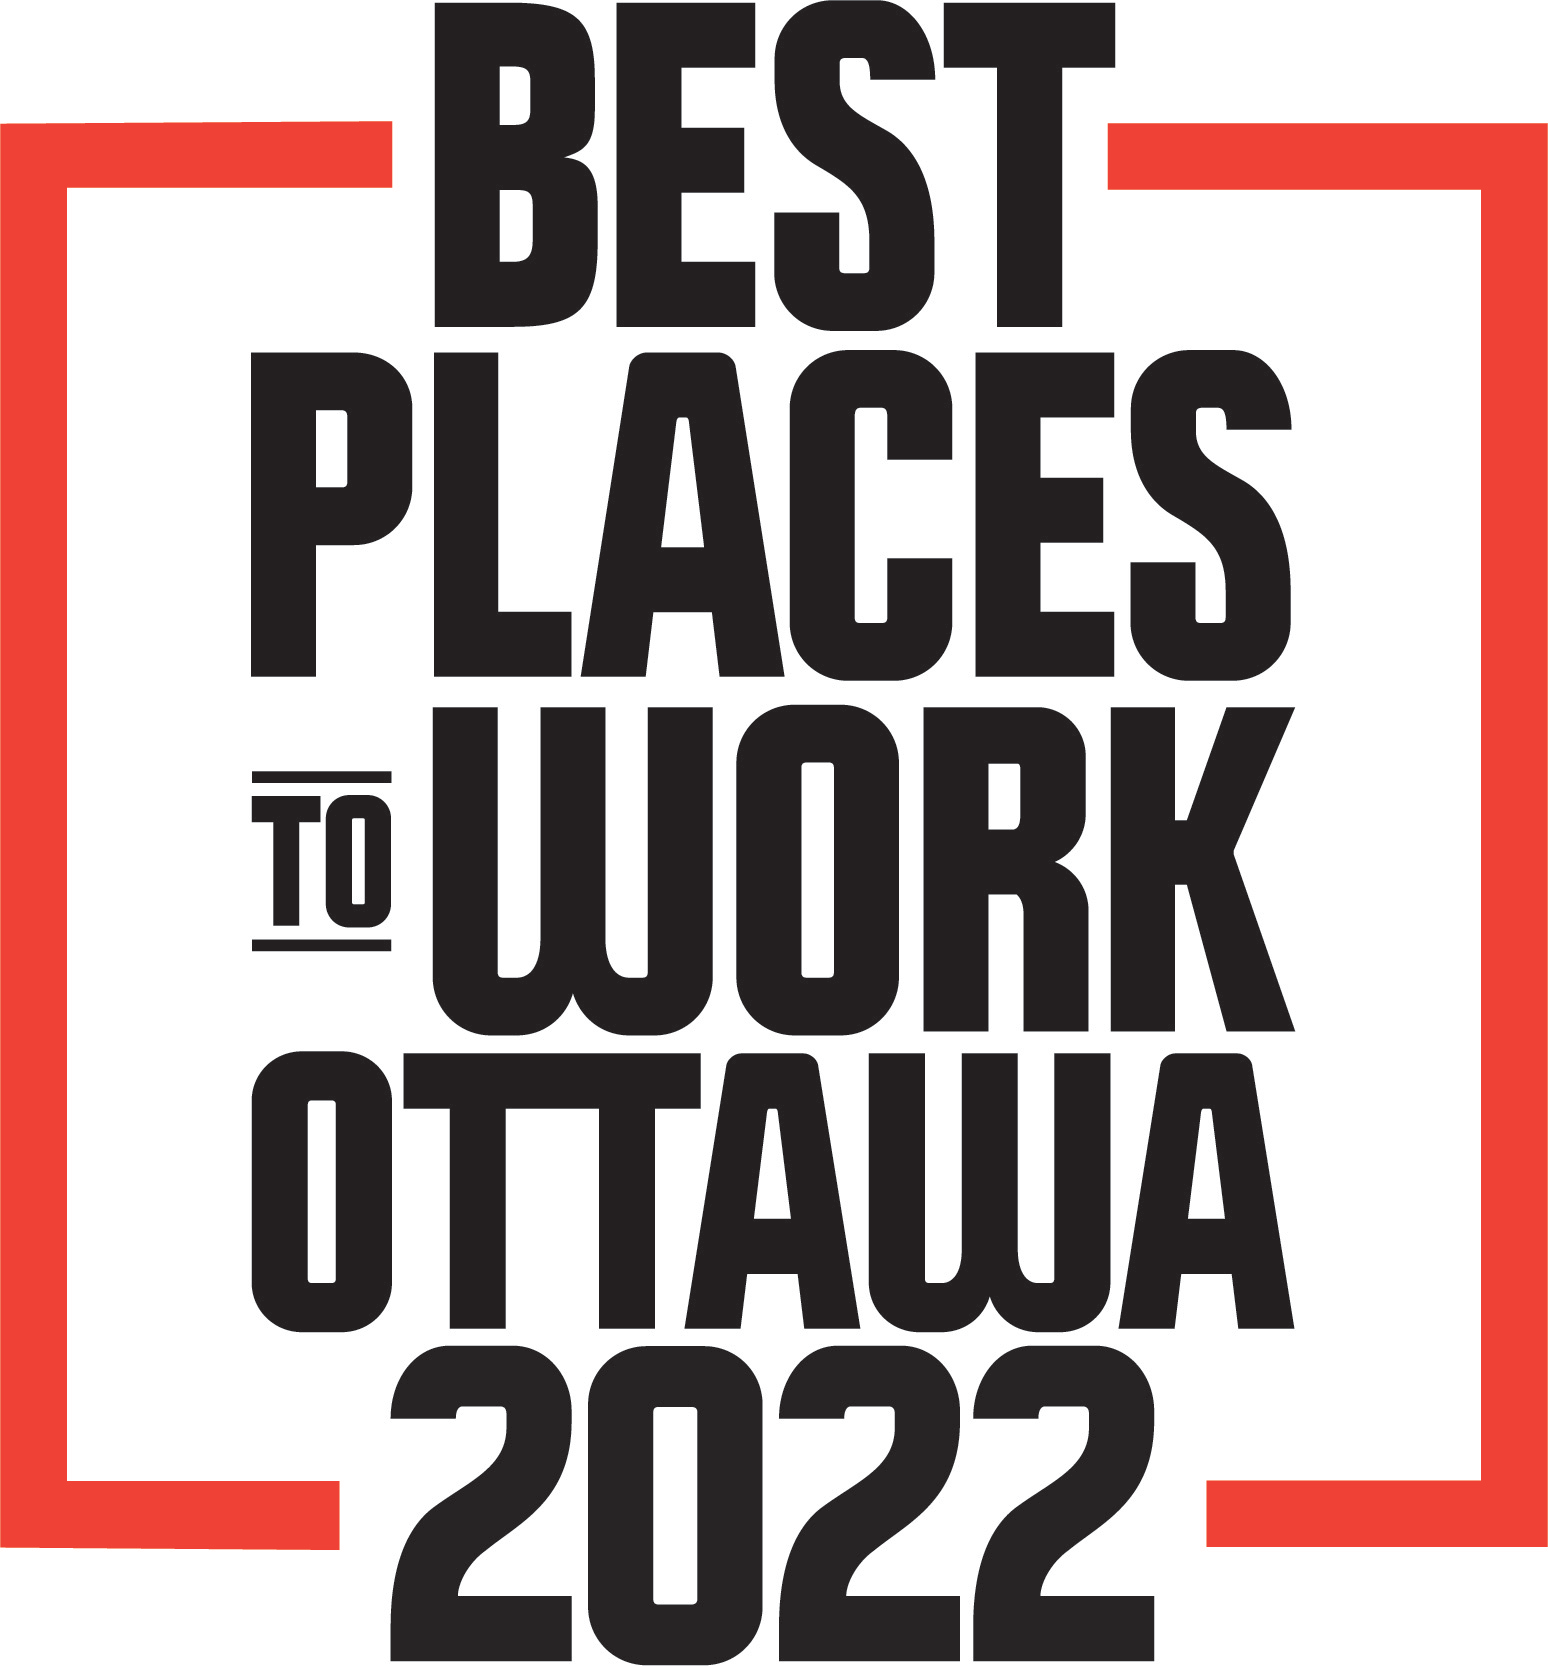 Ottawa's Best place to work logo